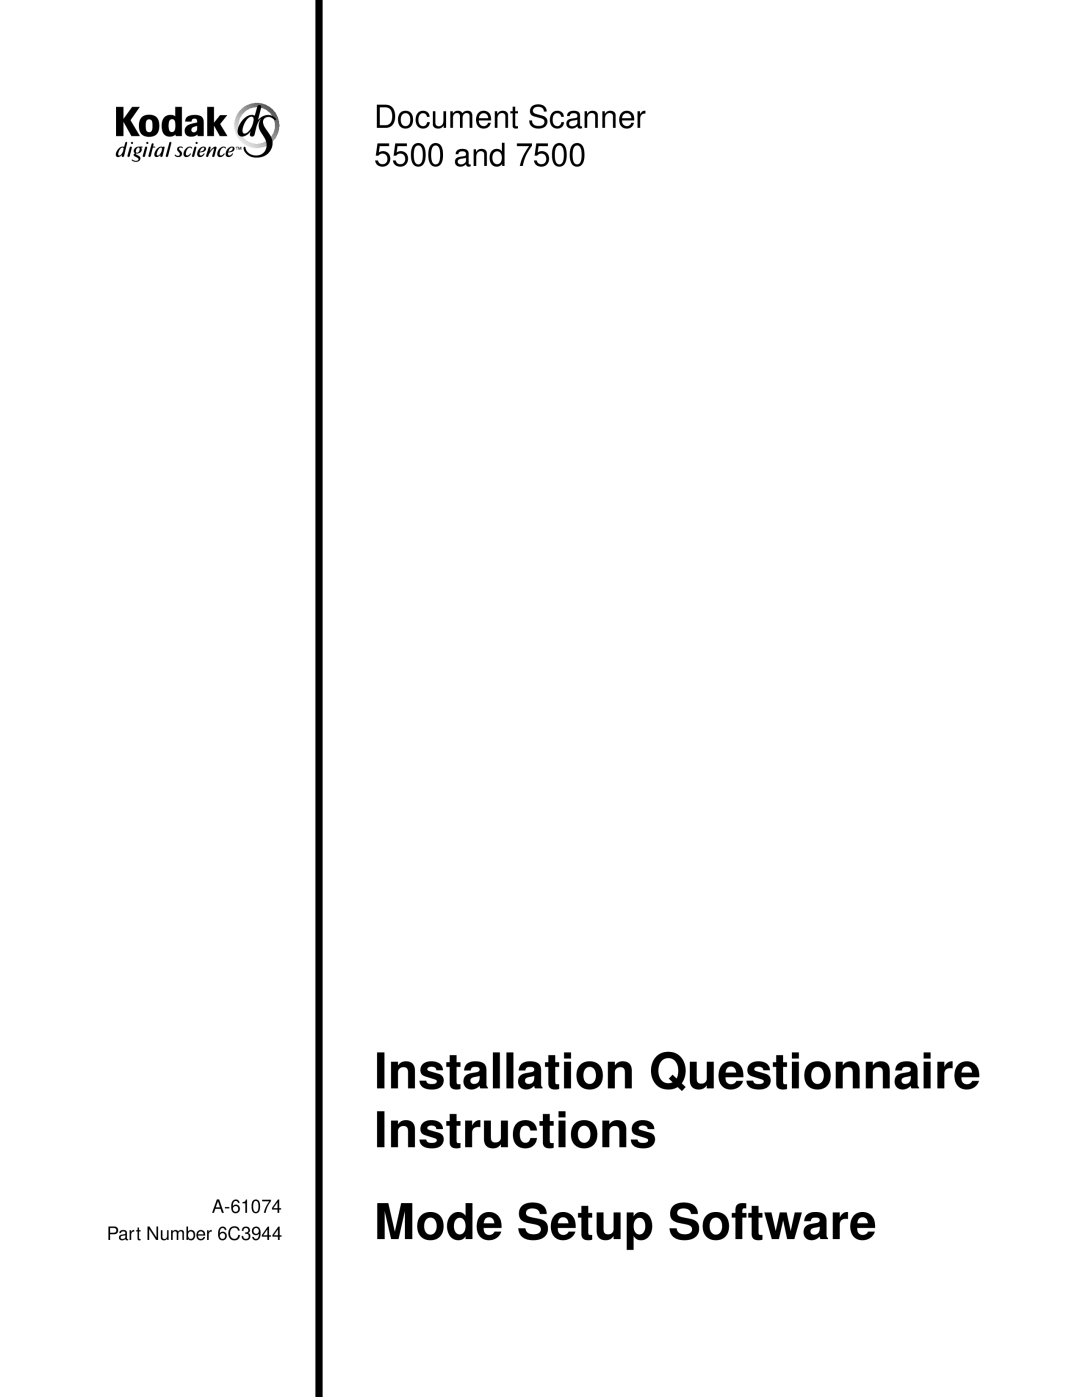 Kodak 7500 manual Installation Questionnaire Instructions, Mode Setup Software, Document Scanner 5500 and 